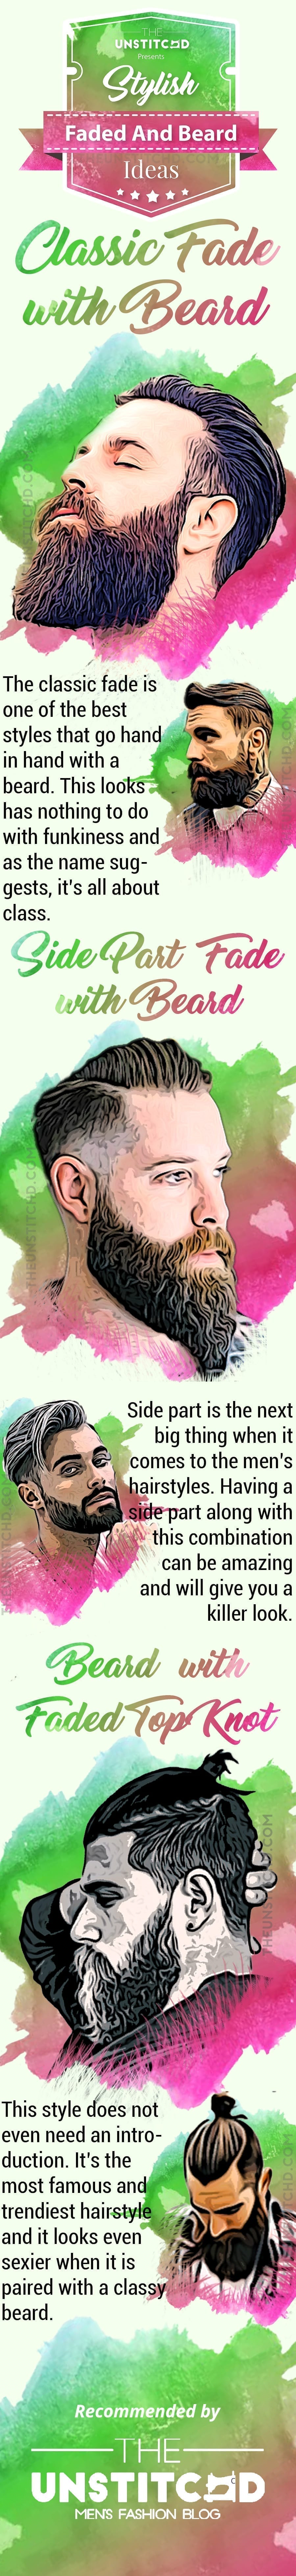 bearded-fade-hairstyle-info